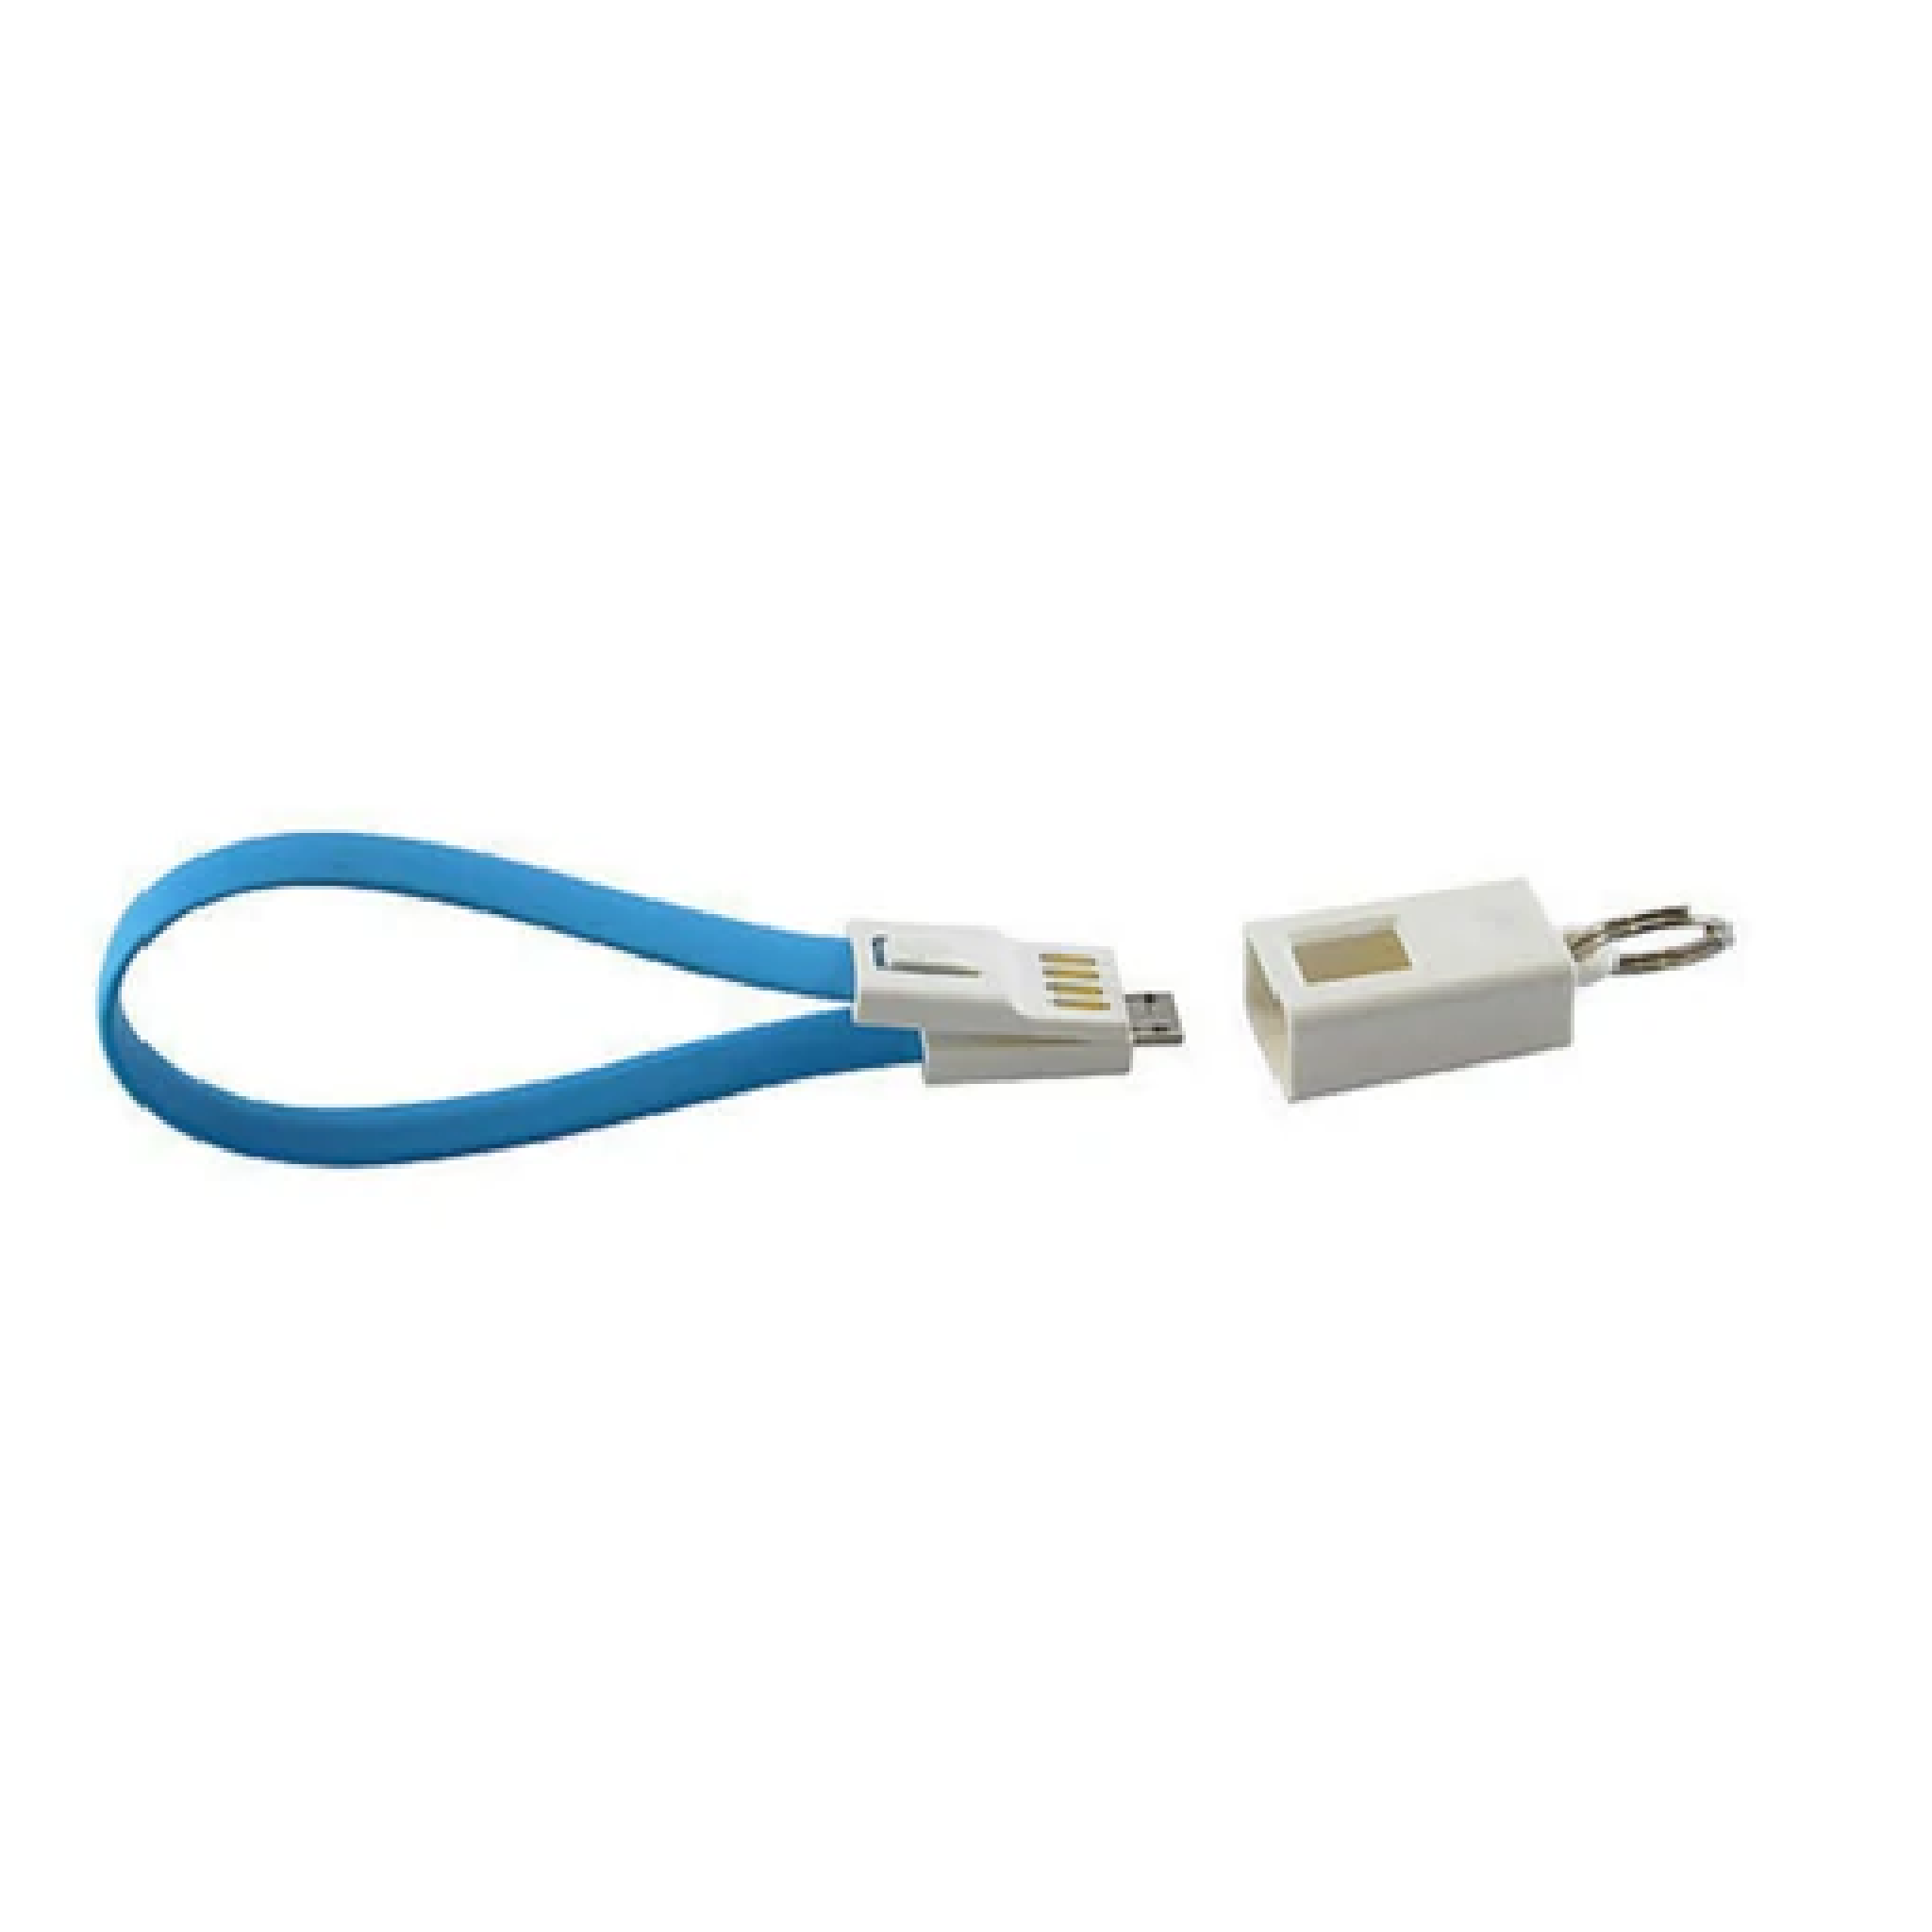 EUROO ECM-102MU Micro USB Key Chain Cable